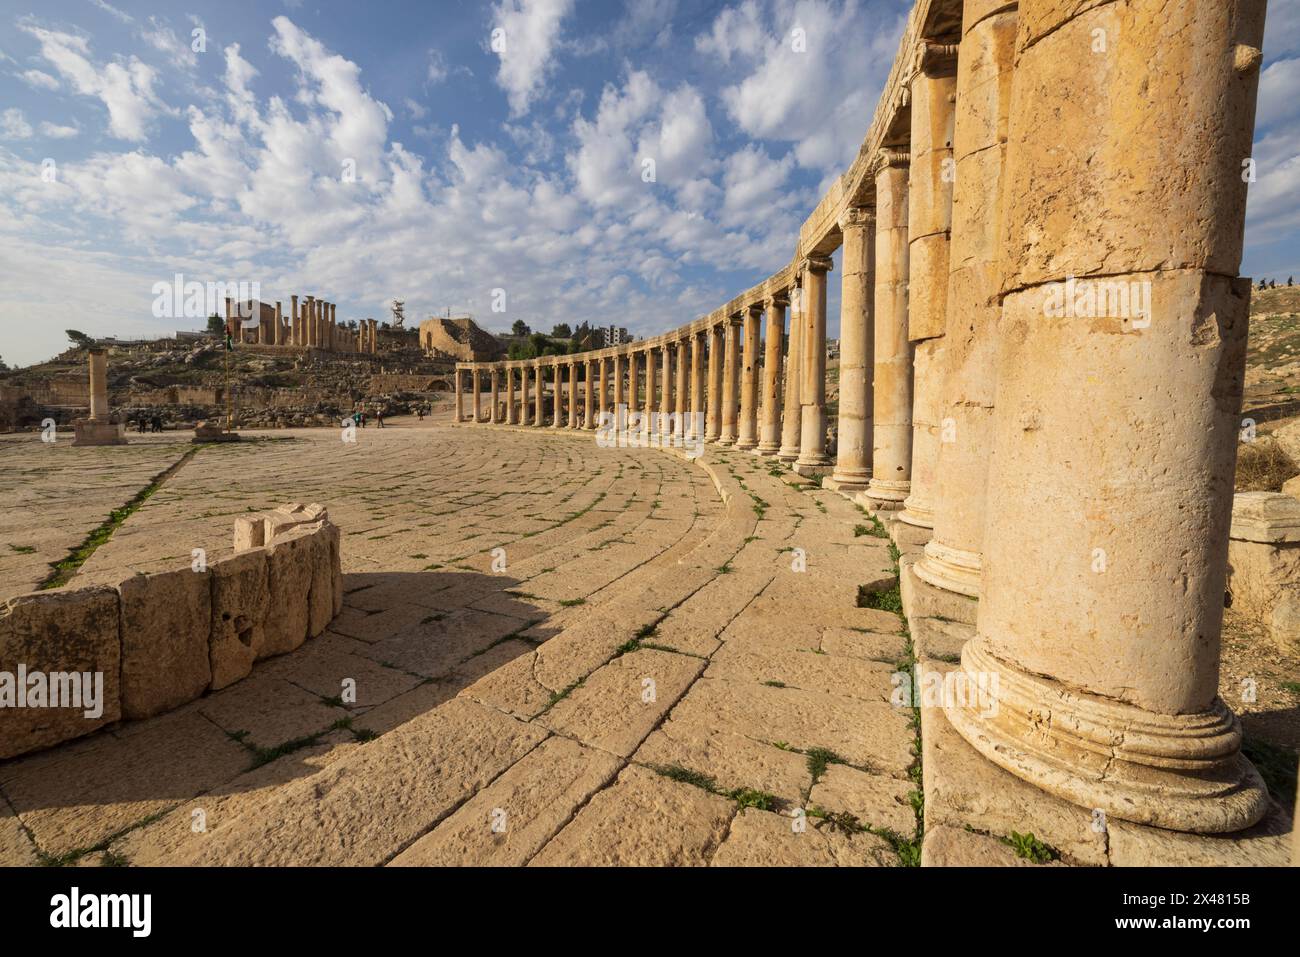 Jordanien, Amman. Oval Plaza, römische Ruinen mit Tempel, Forum und Amphitheater. Stockfoto